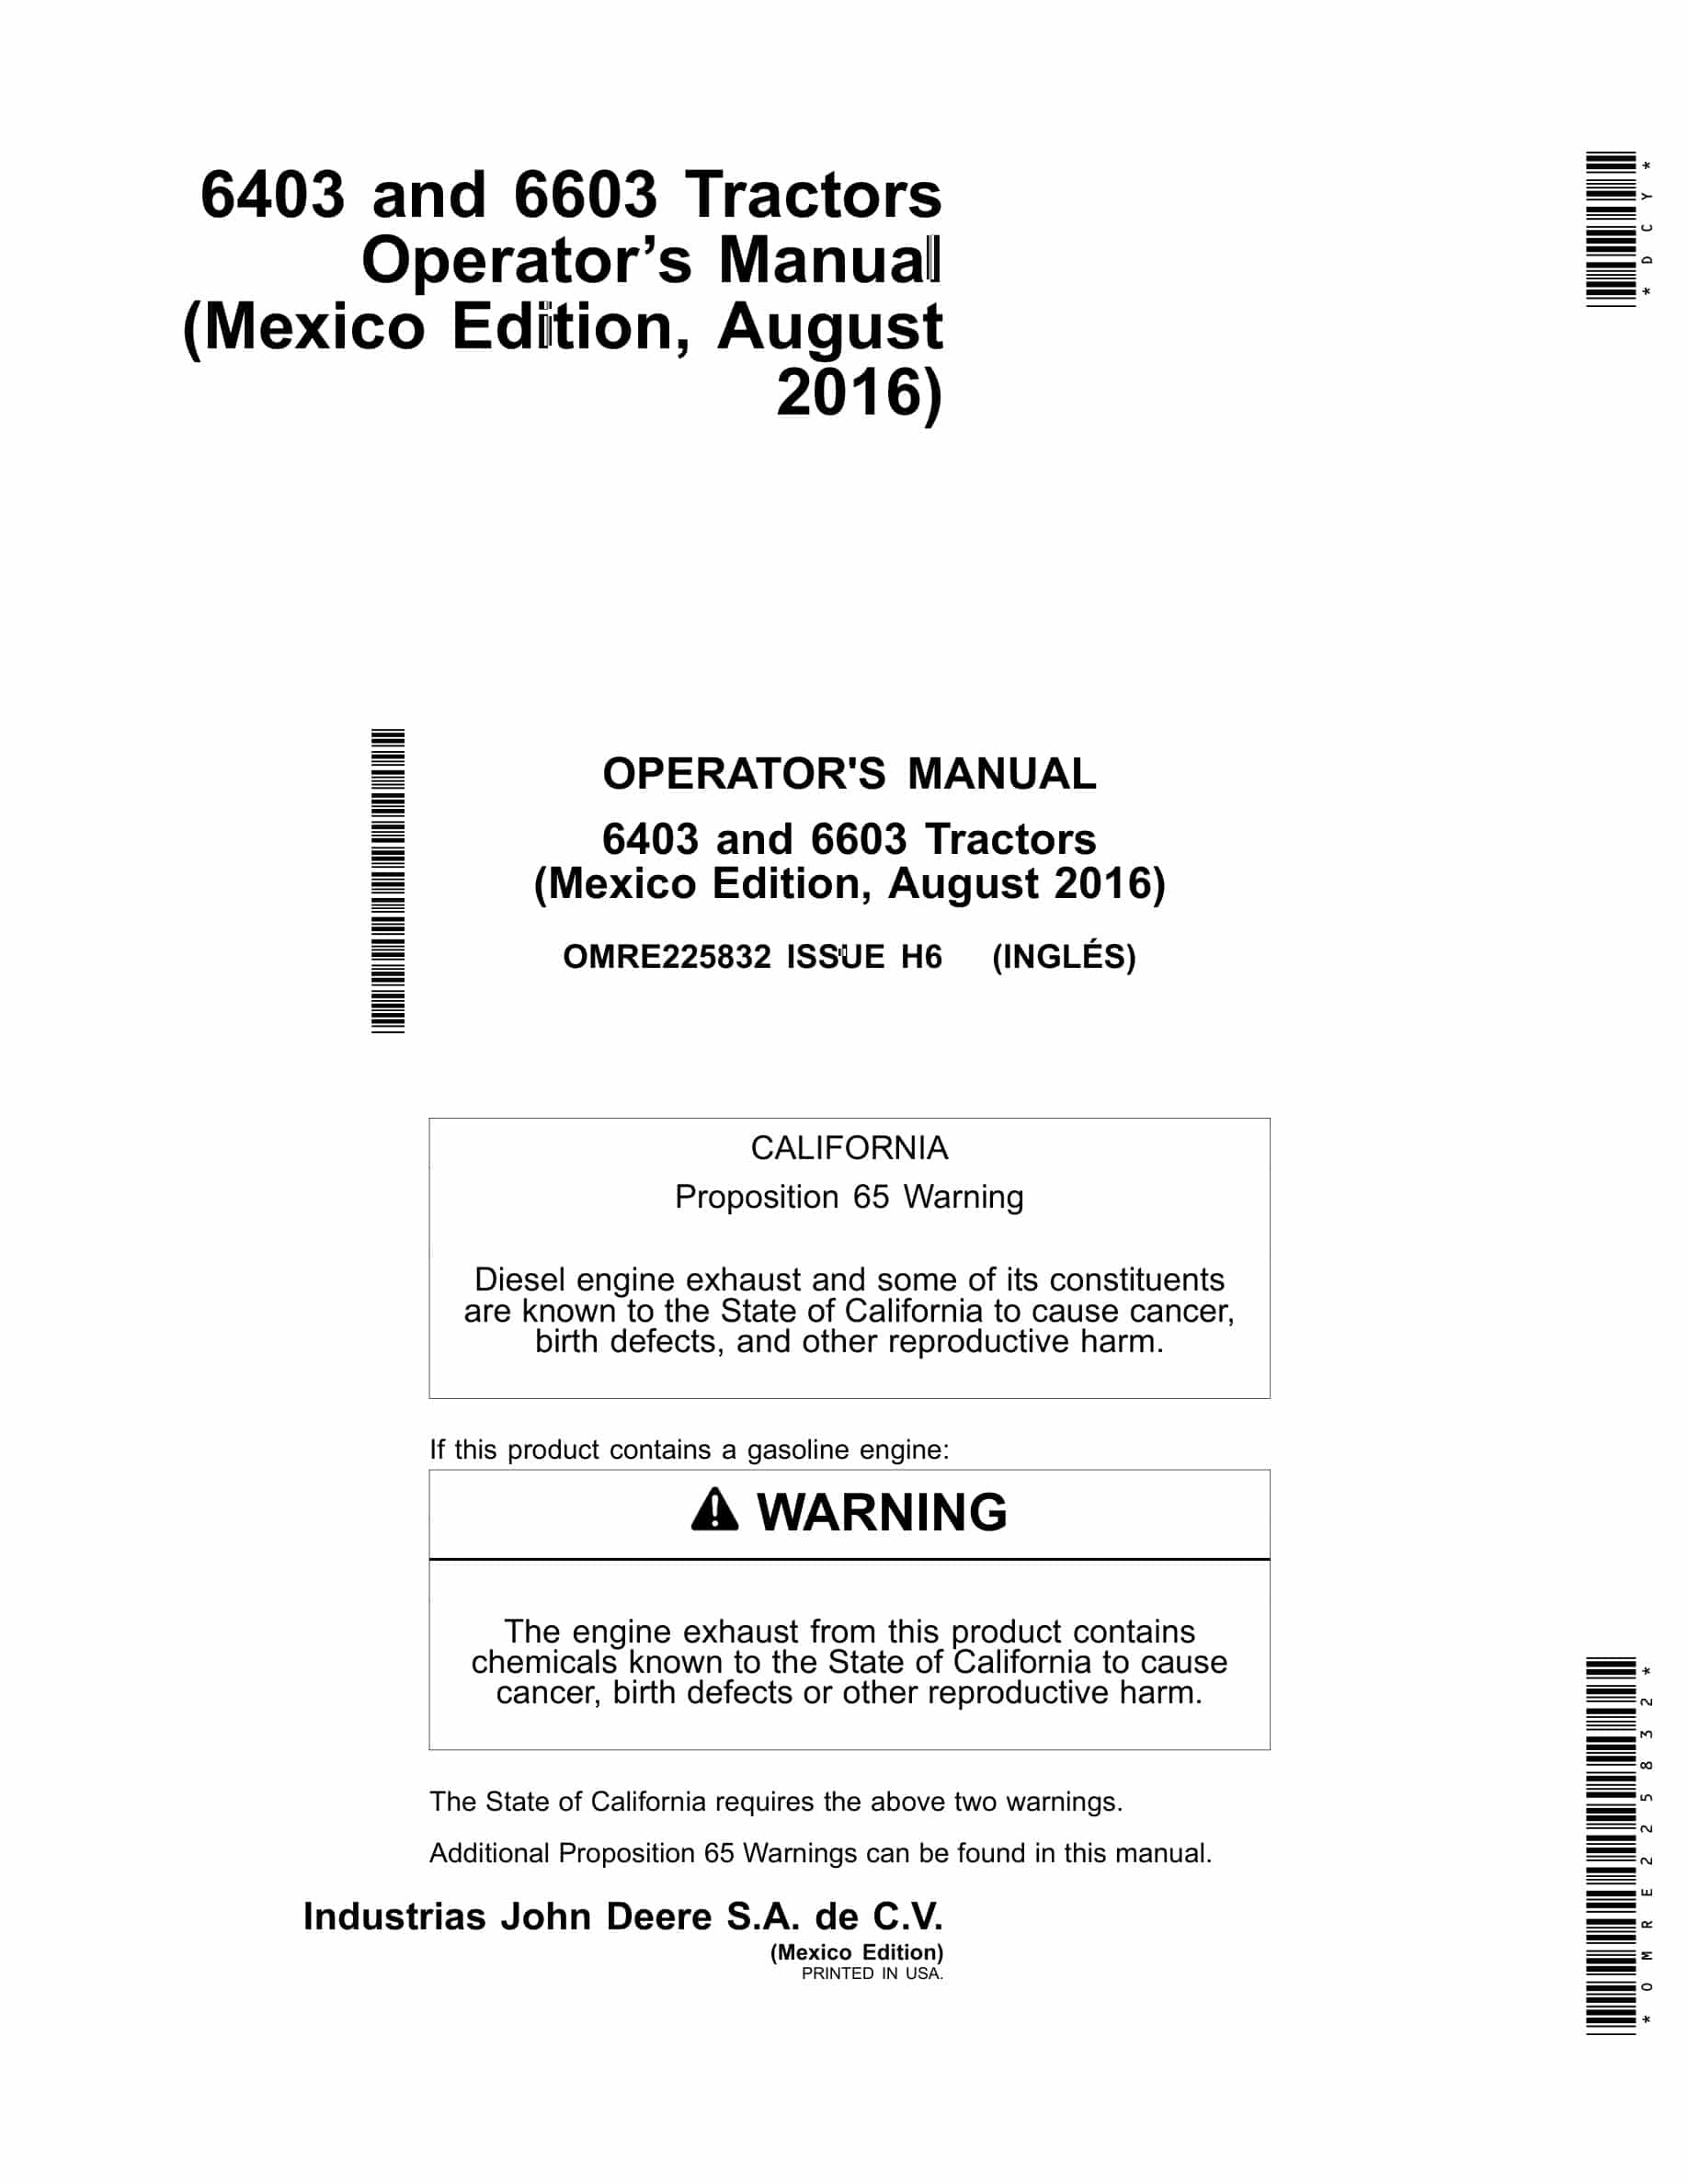 John Deere 6403 And 6603 Tractors Operator Manuals OMRE225832-1